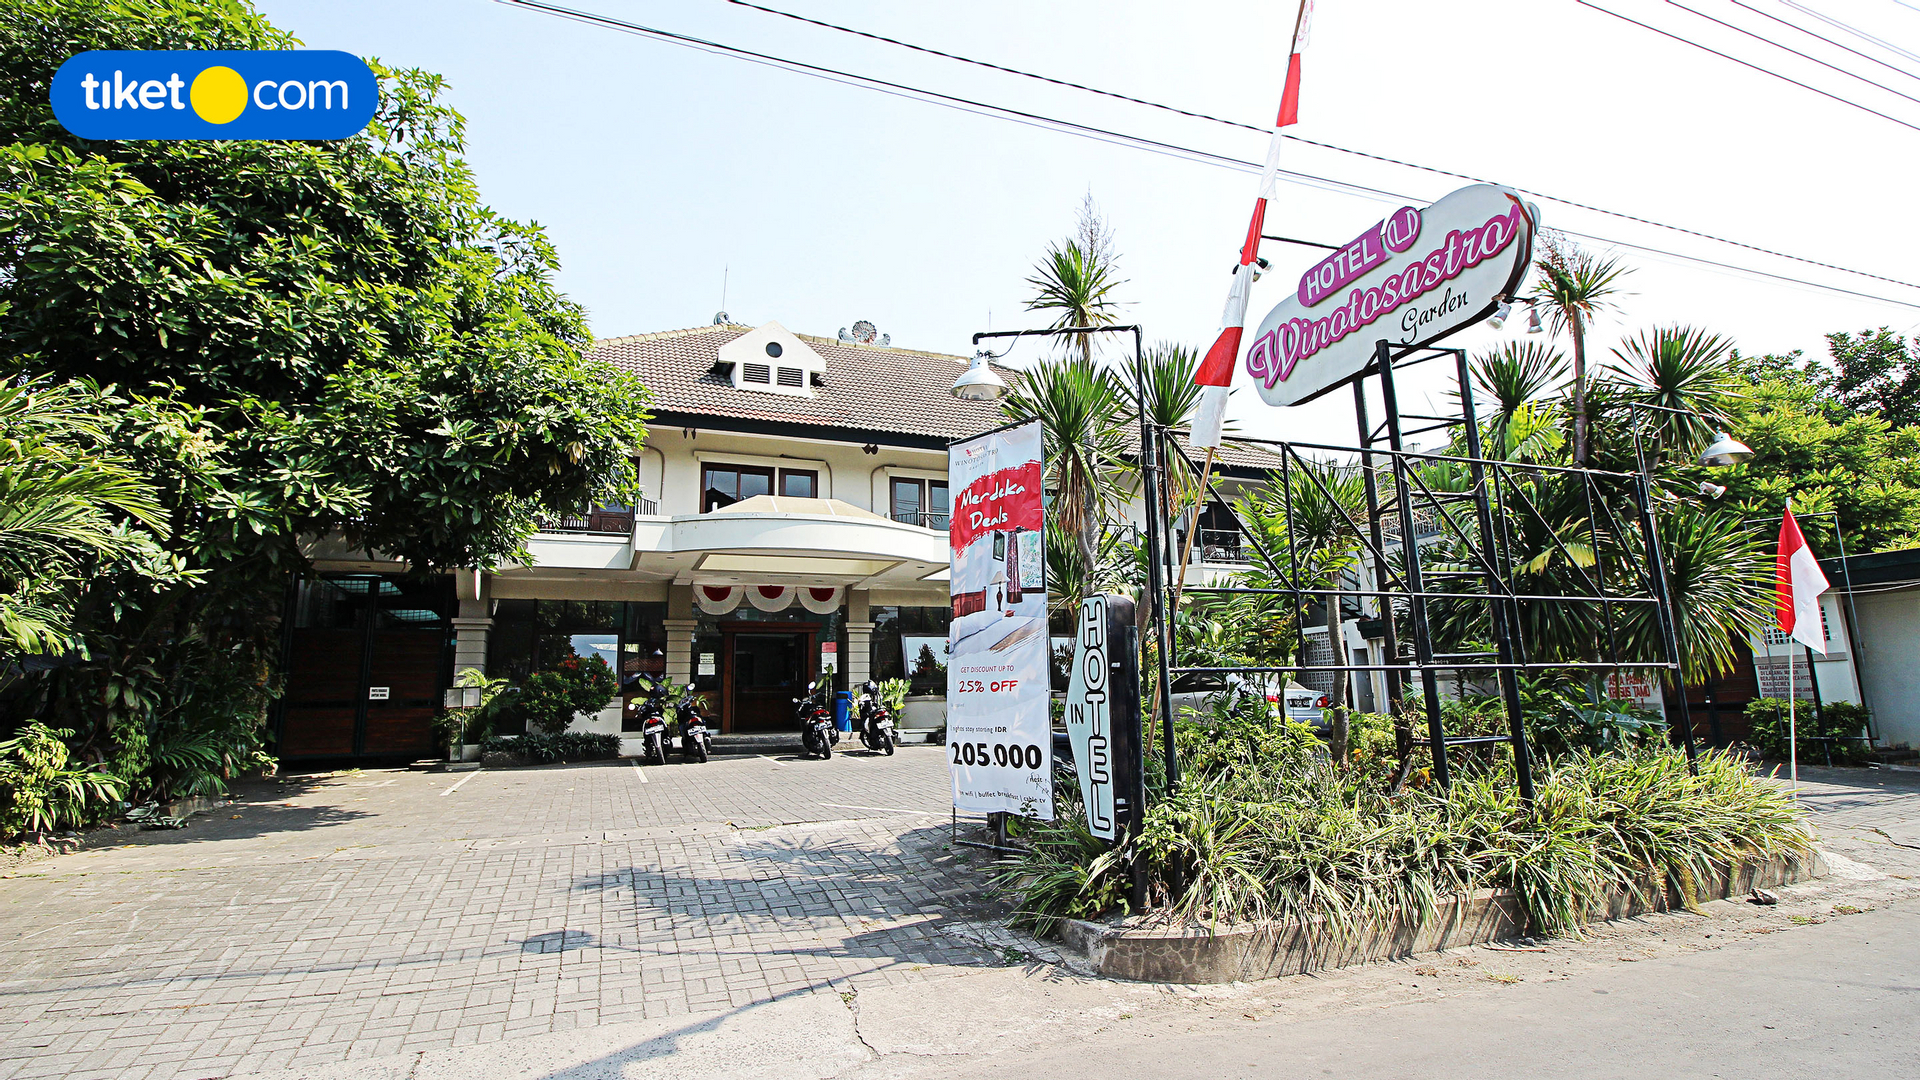 Exterior & Views 1, Hotel Winotosastro Garden, Yogyakarta